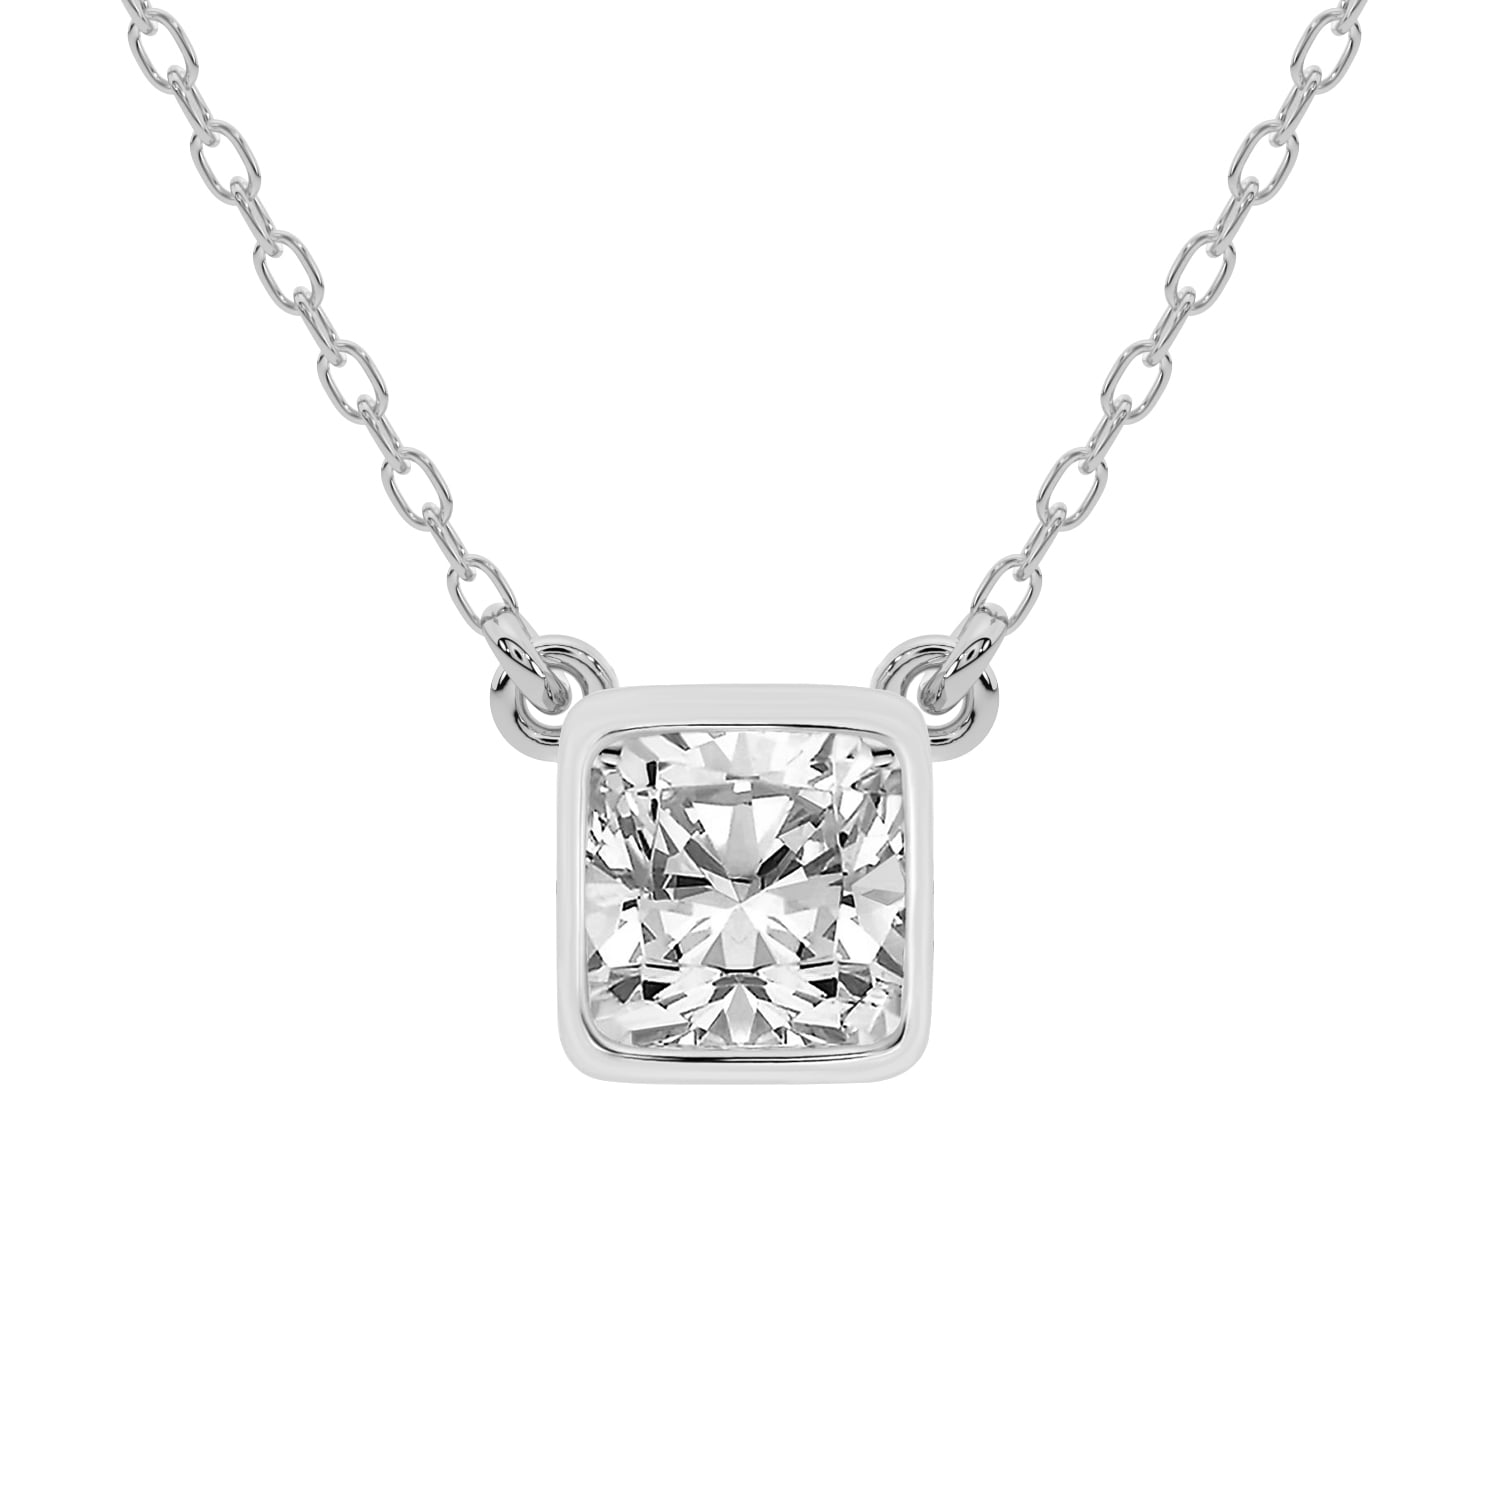 Floating Halo Pear Diamond Necklace | Floating Diamond Necklace